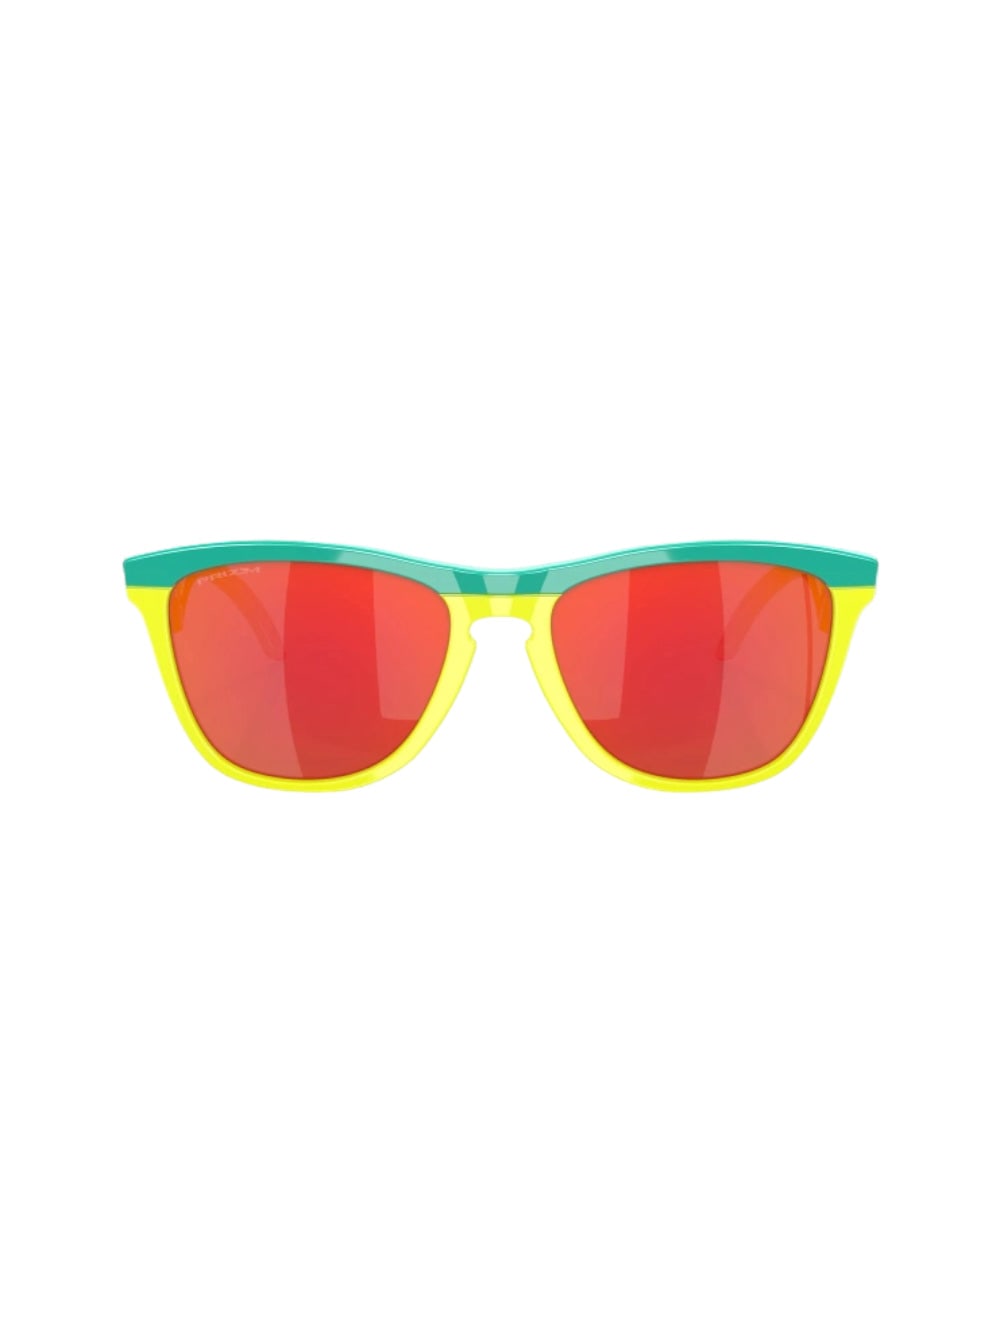 Shop Oakley Frogskins Hybrid - 9289 Sunglasses